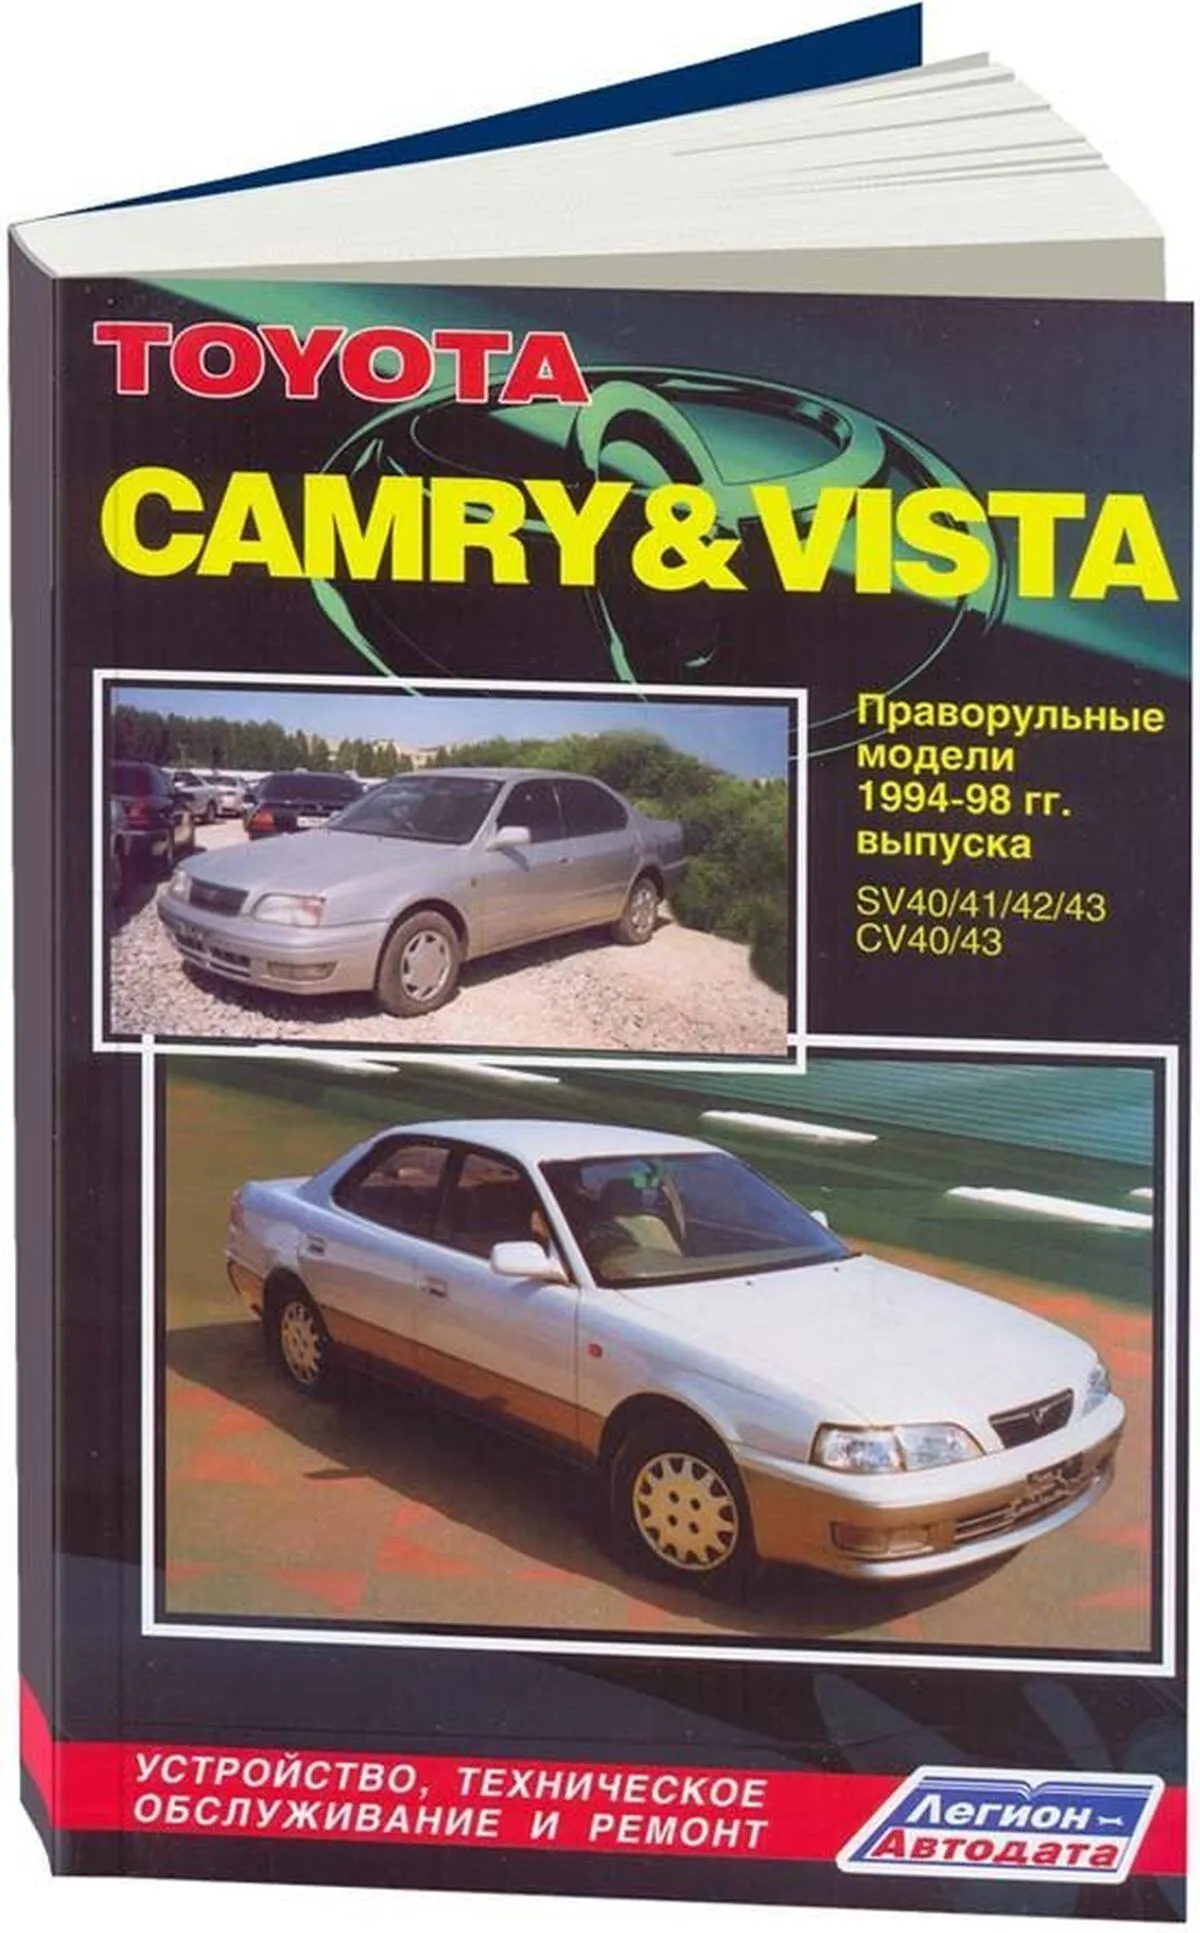 Книга: TOYOTA CAMRY / VISTA (б , д) 1994-1998 г.в., рем., то | Легион-Aвтодата